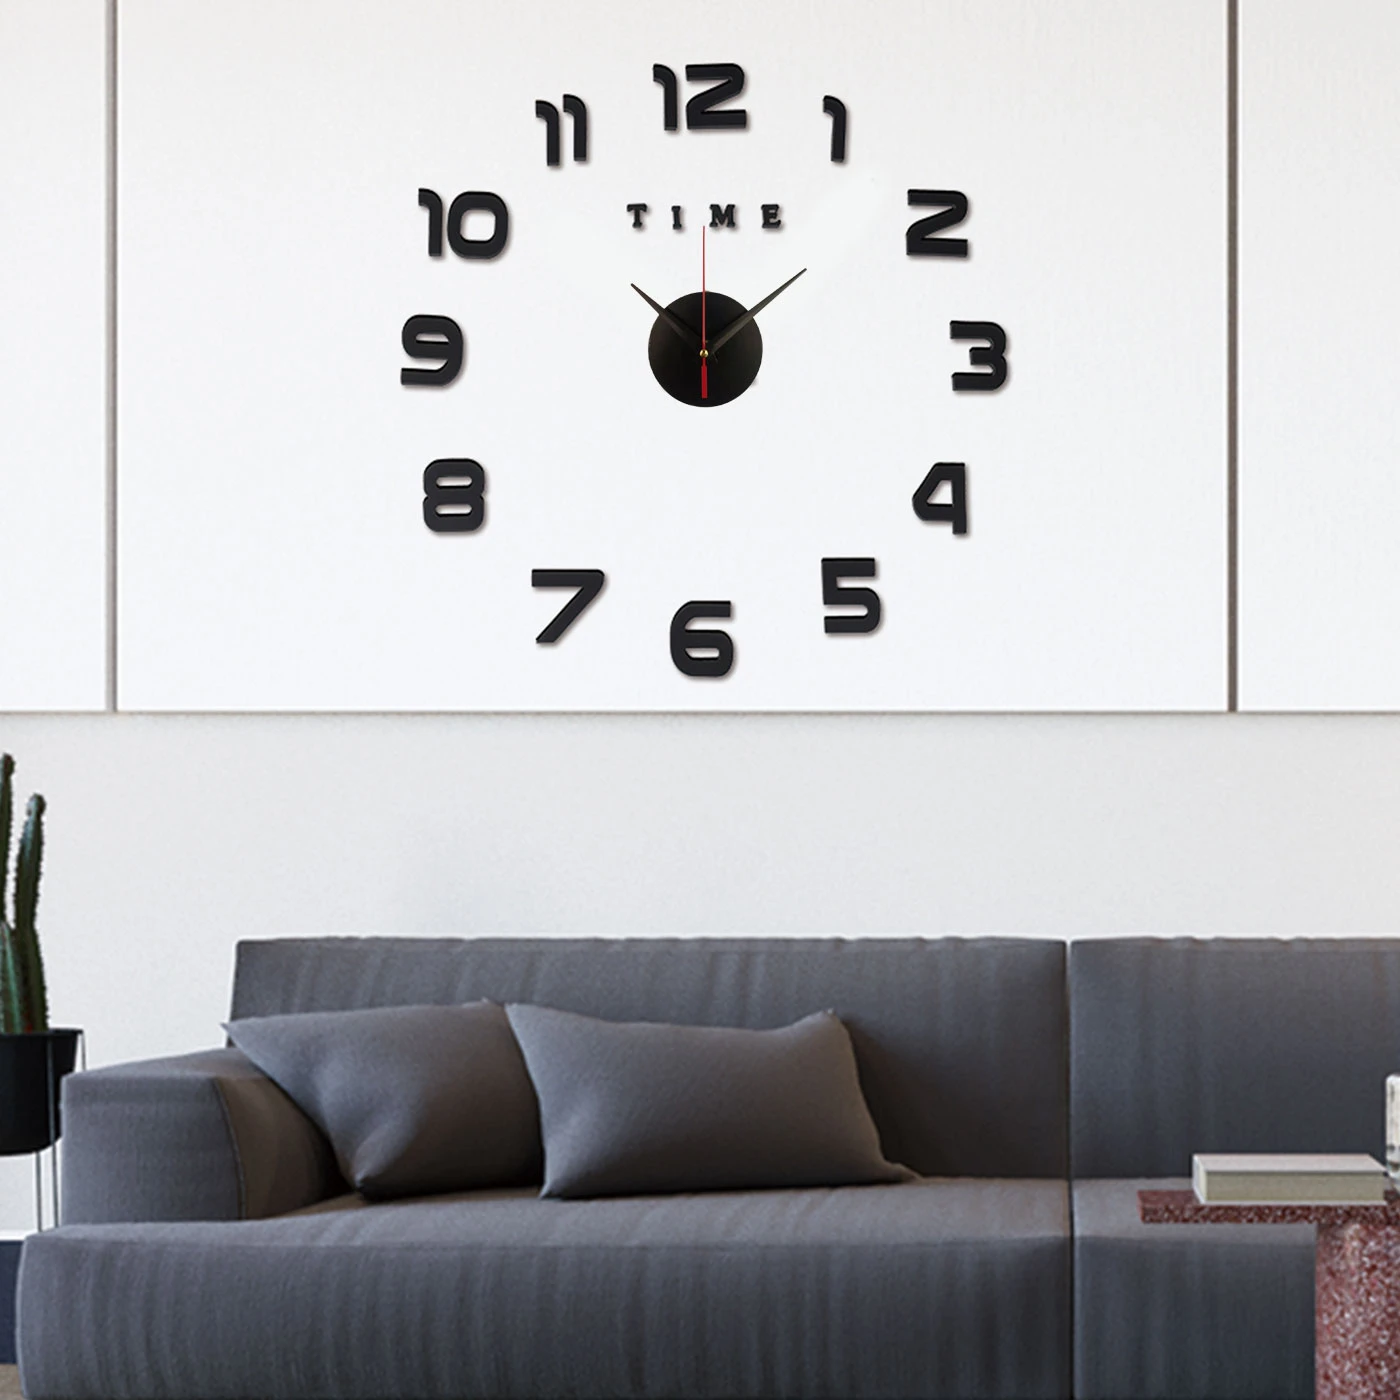 3D Wall Clock Mirror Wall Stickers Creative DIY Wall Clocks Removable Art Decal Sticker Home Decor Living Room Quartz Needle Hot atomic wall clock